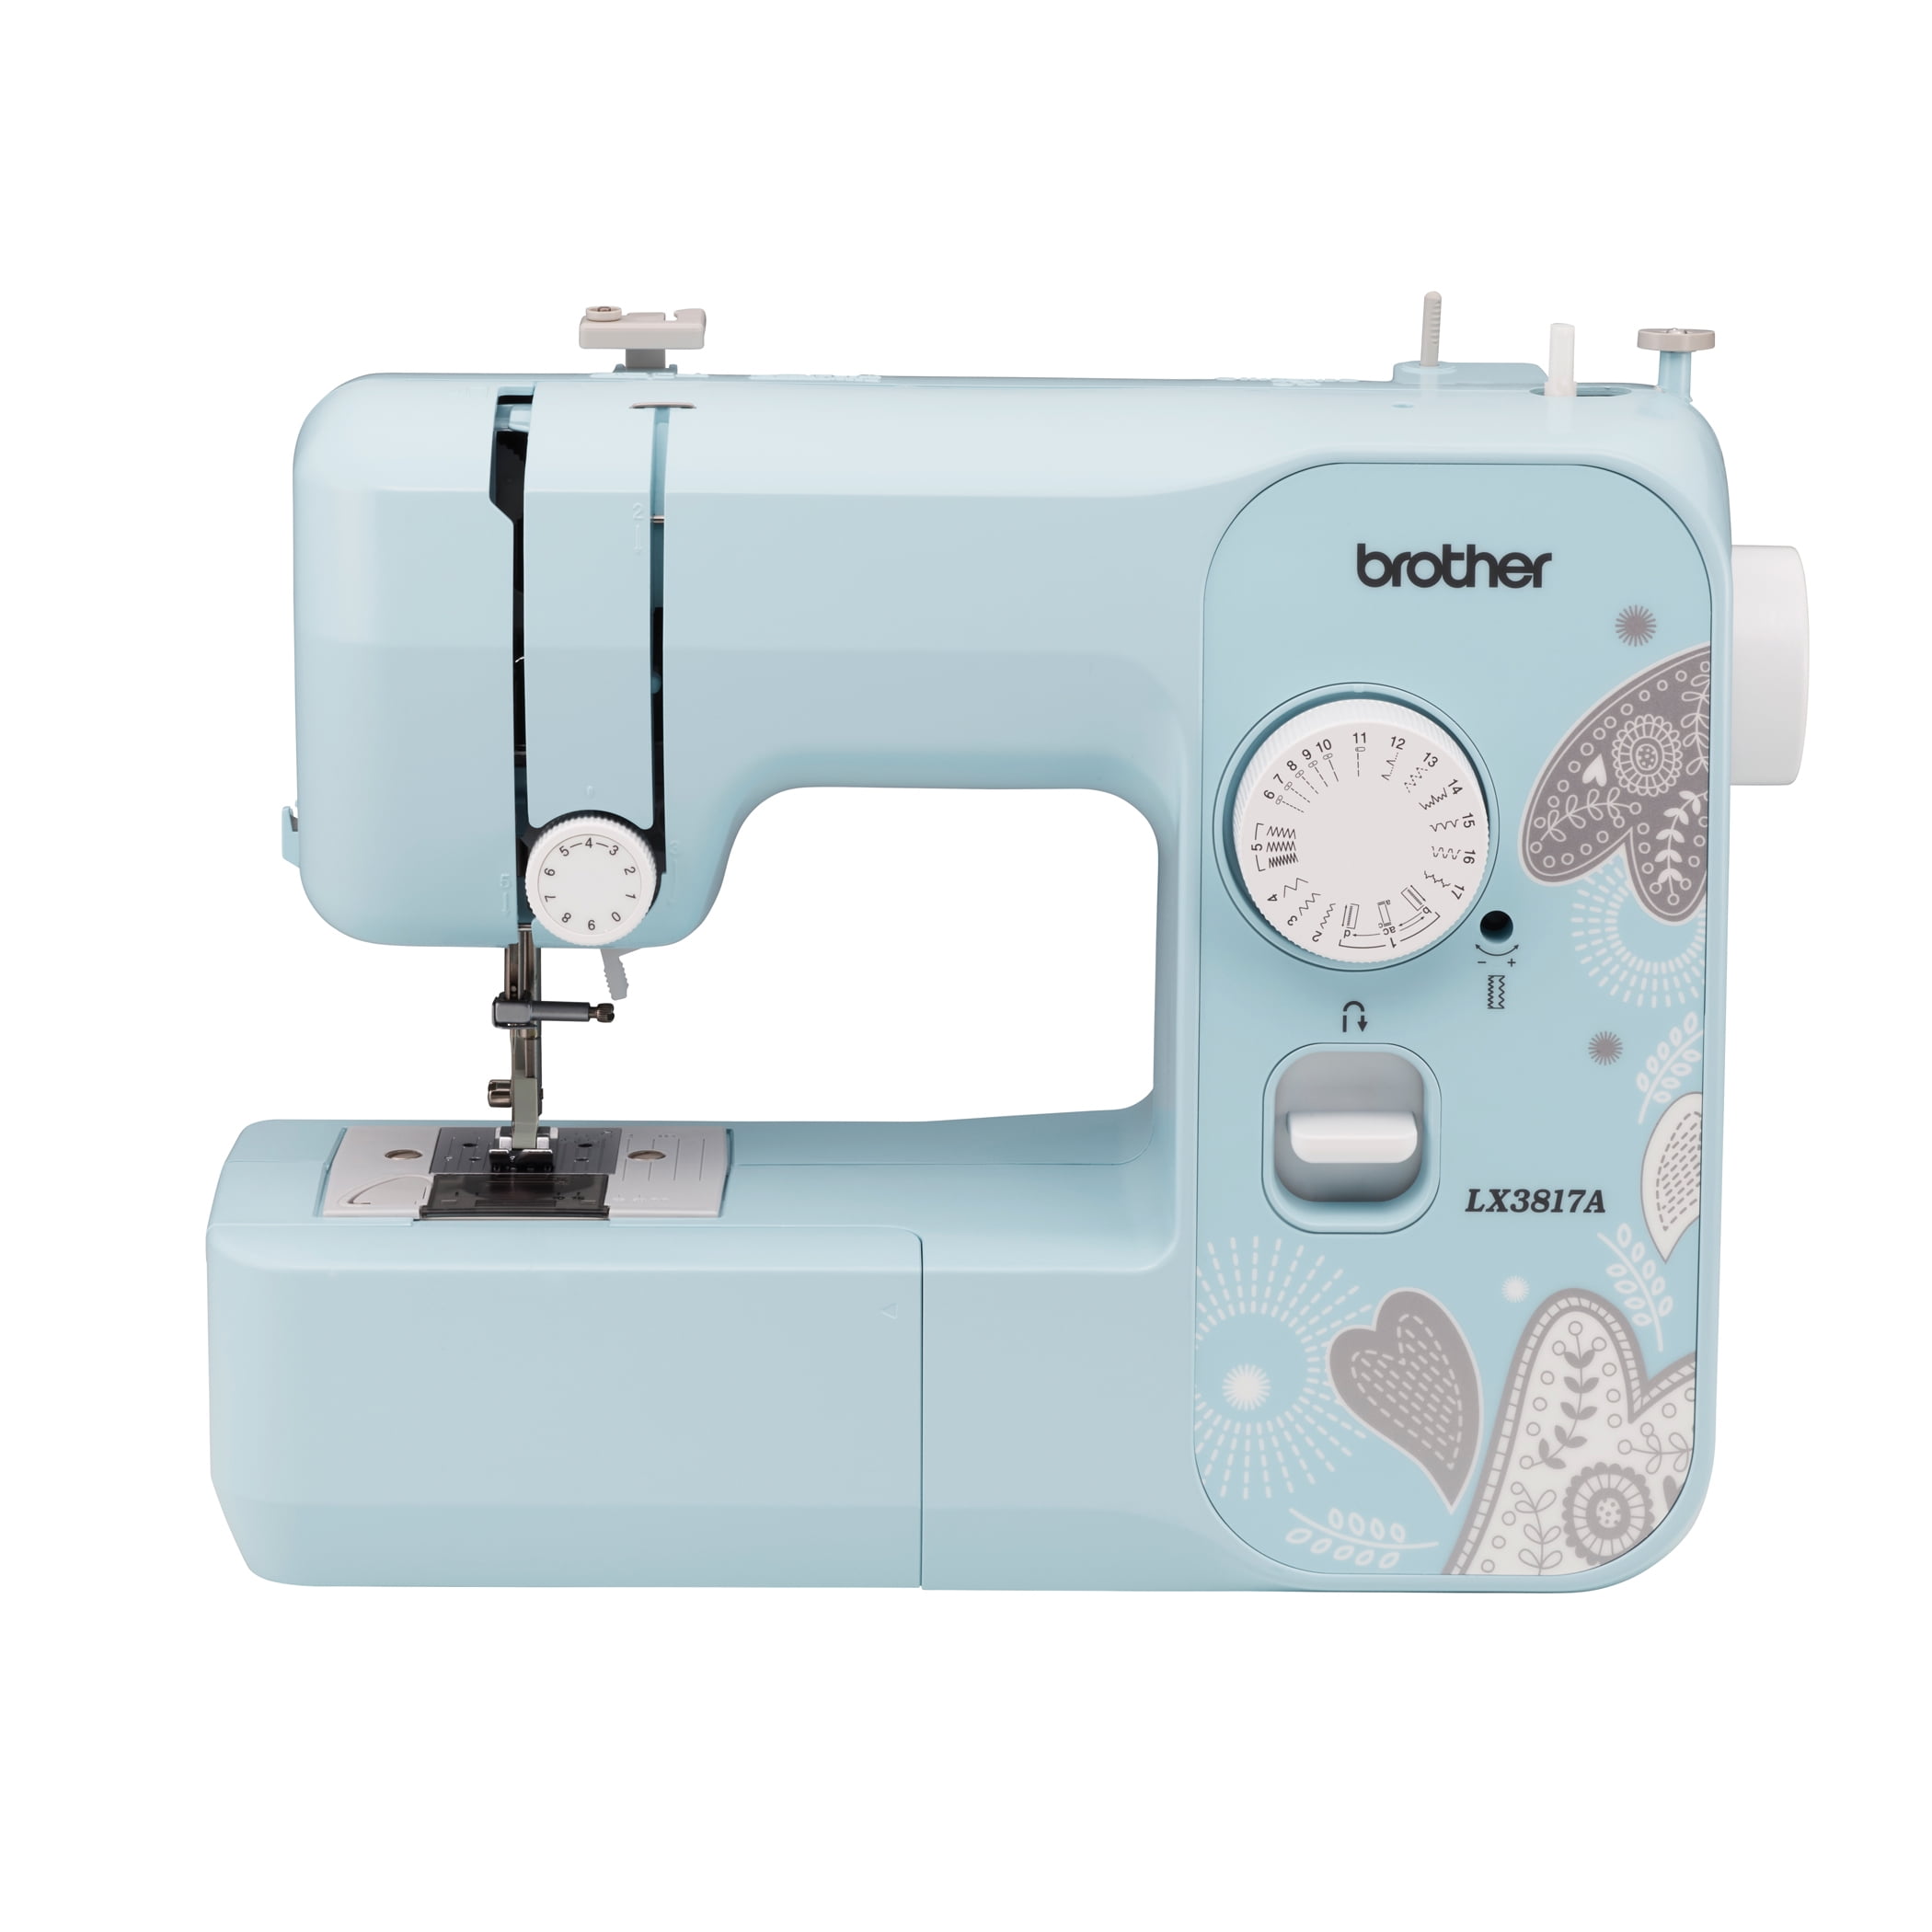 Buy Handheld Sewing Machine Heavy Duty online